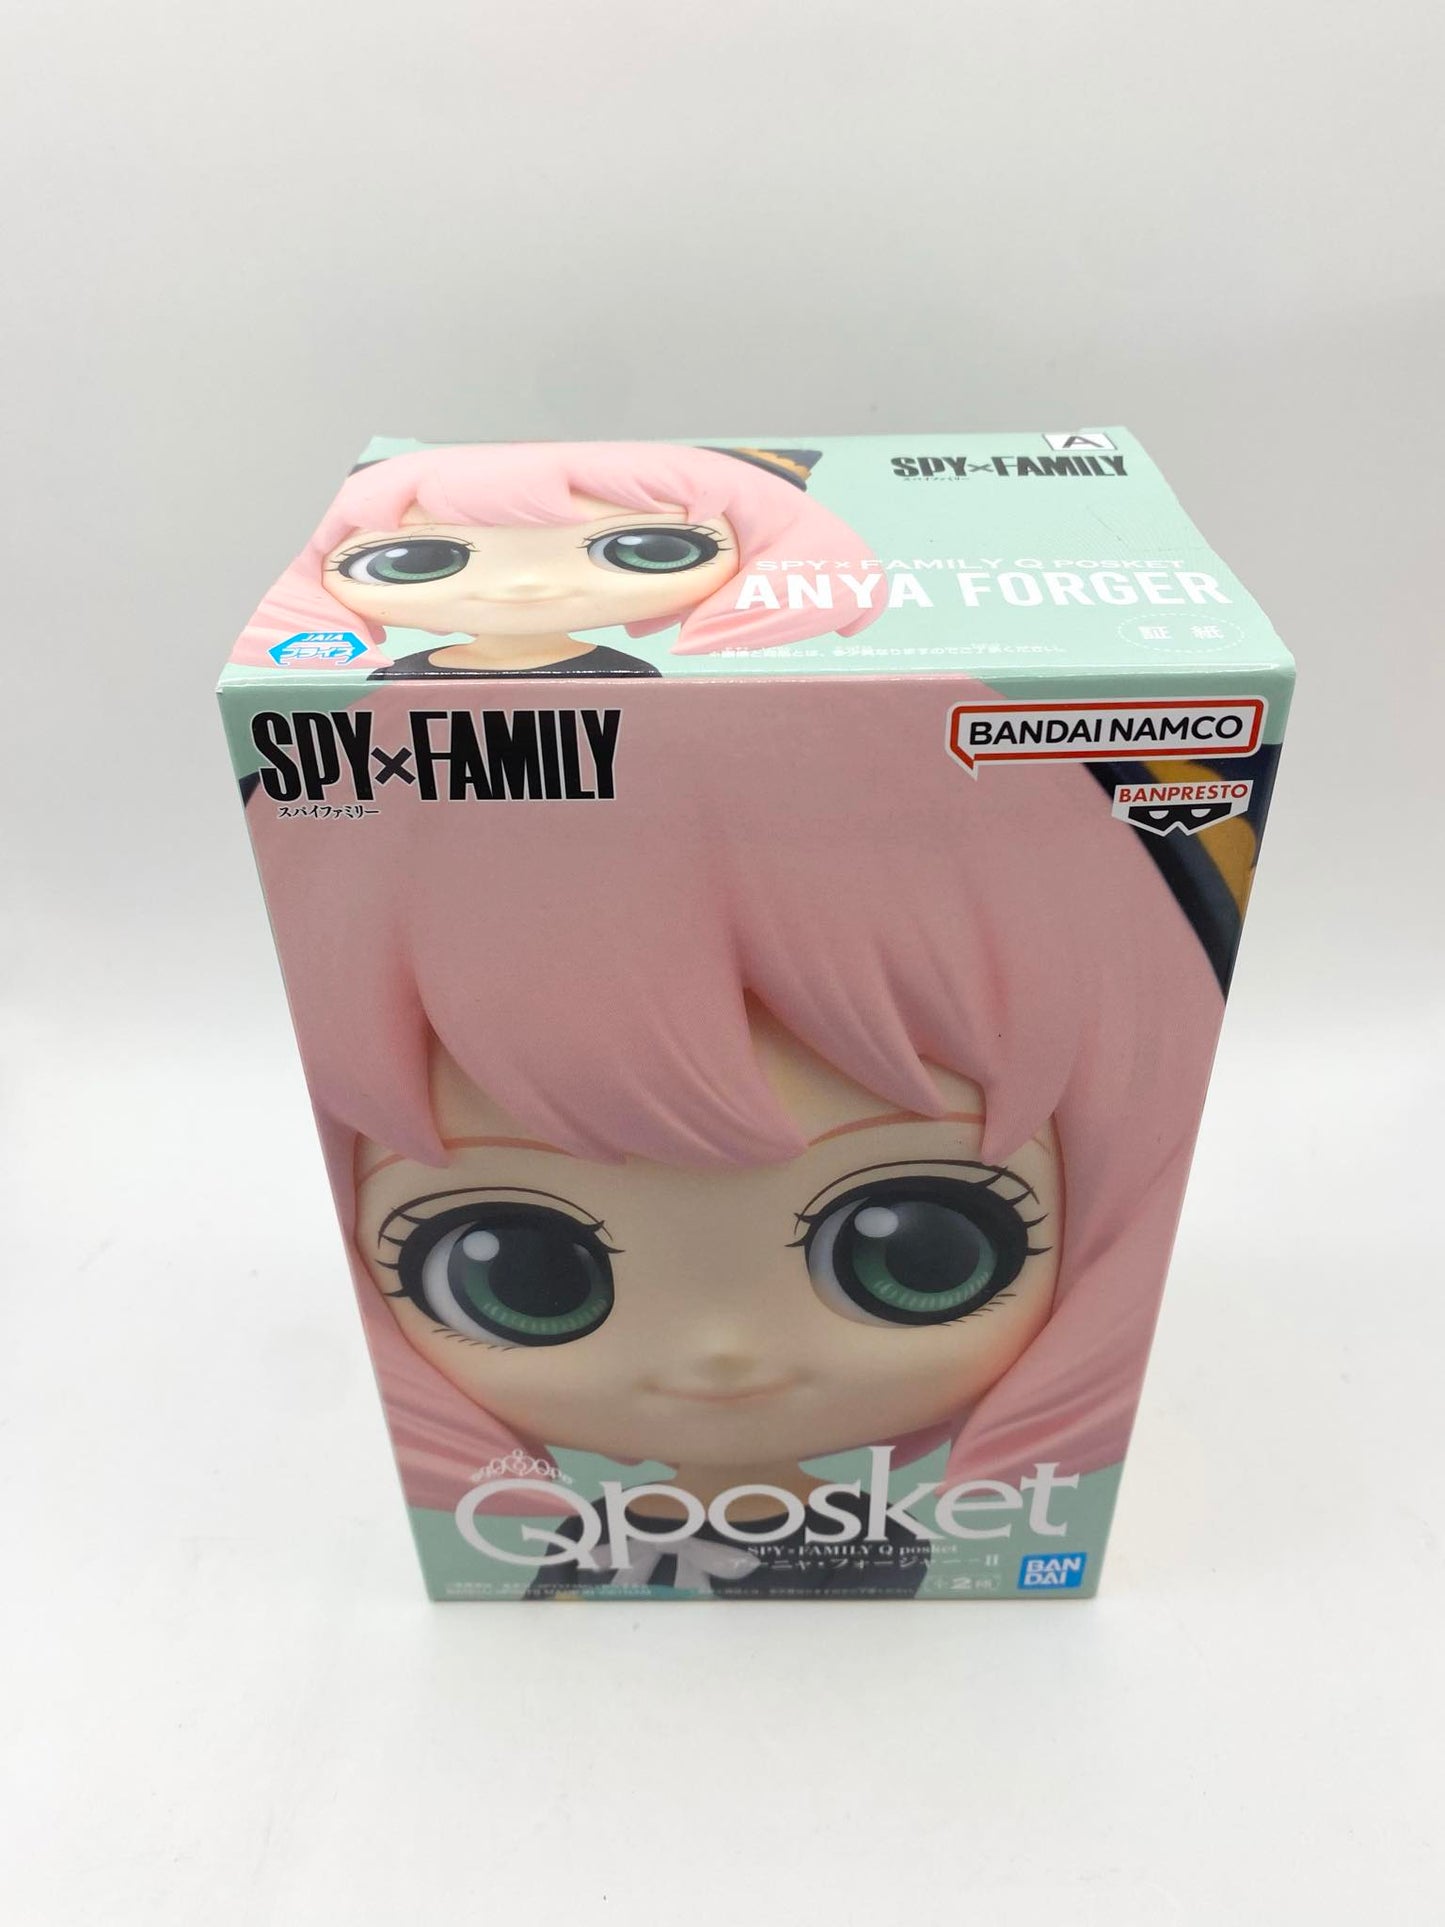 Bandai Spy x Family Qposket Figurine Edition A Boxed